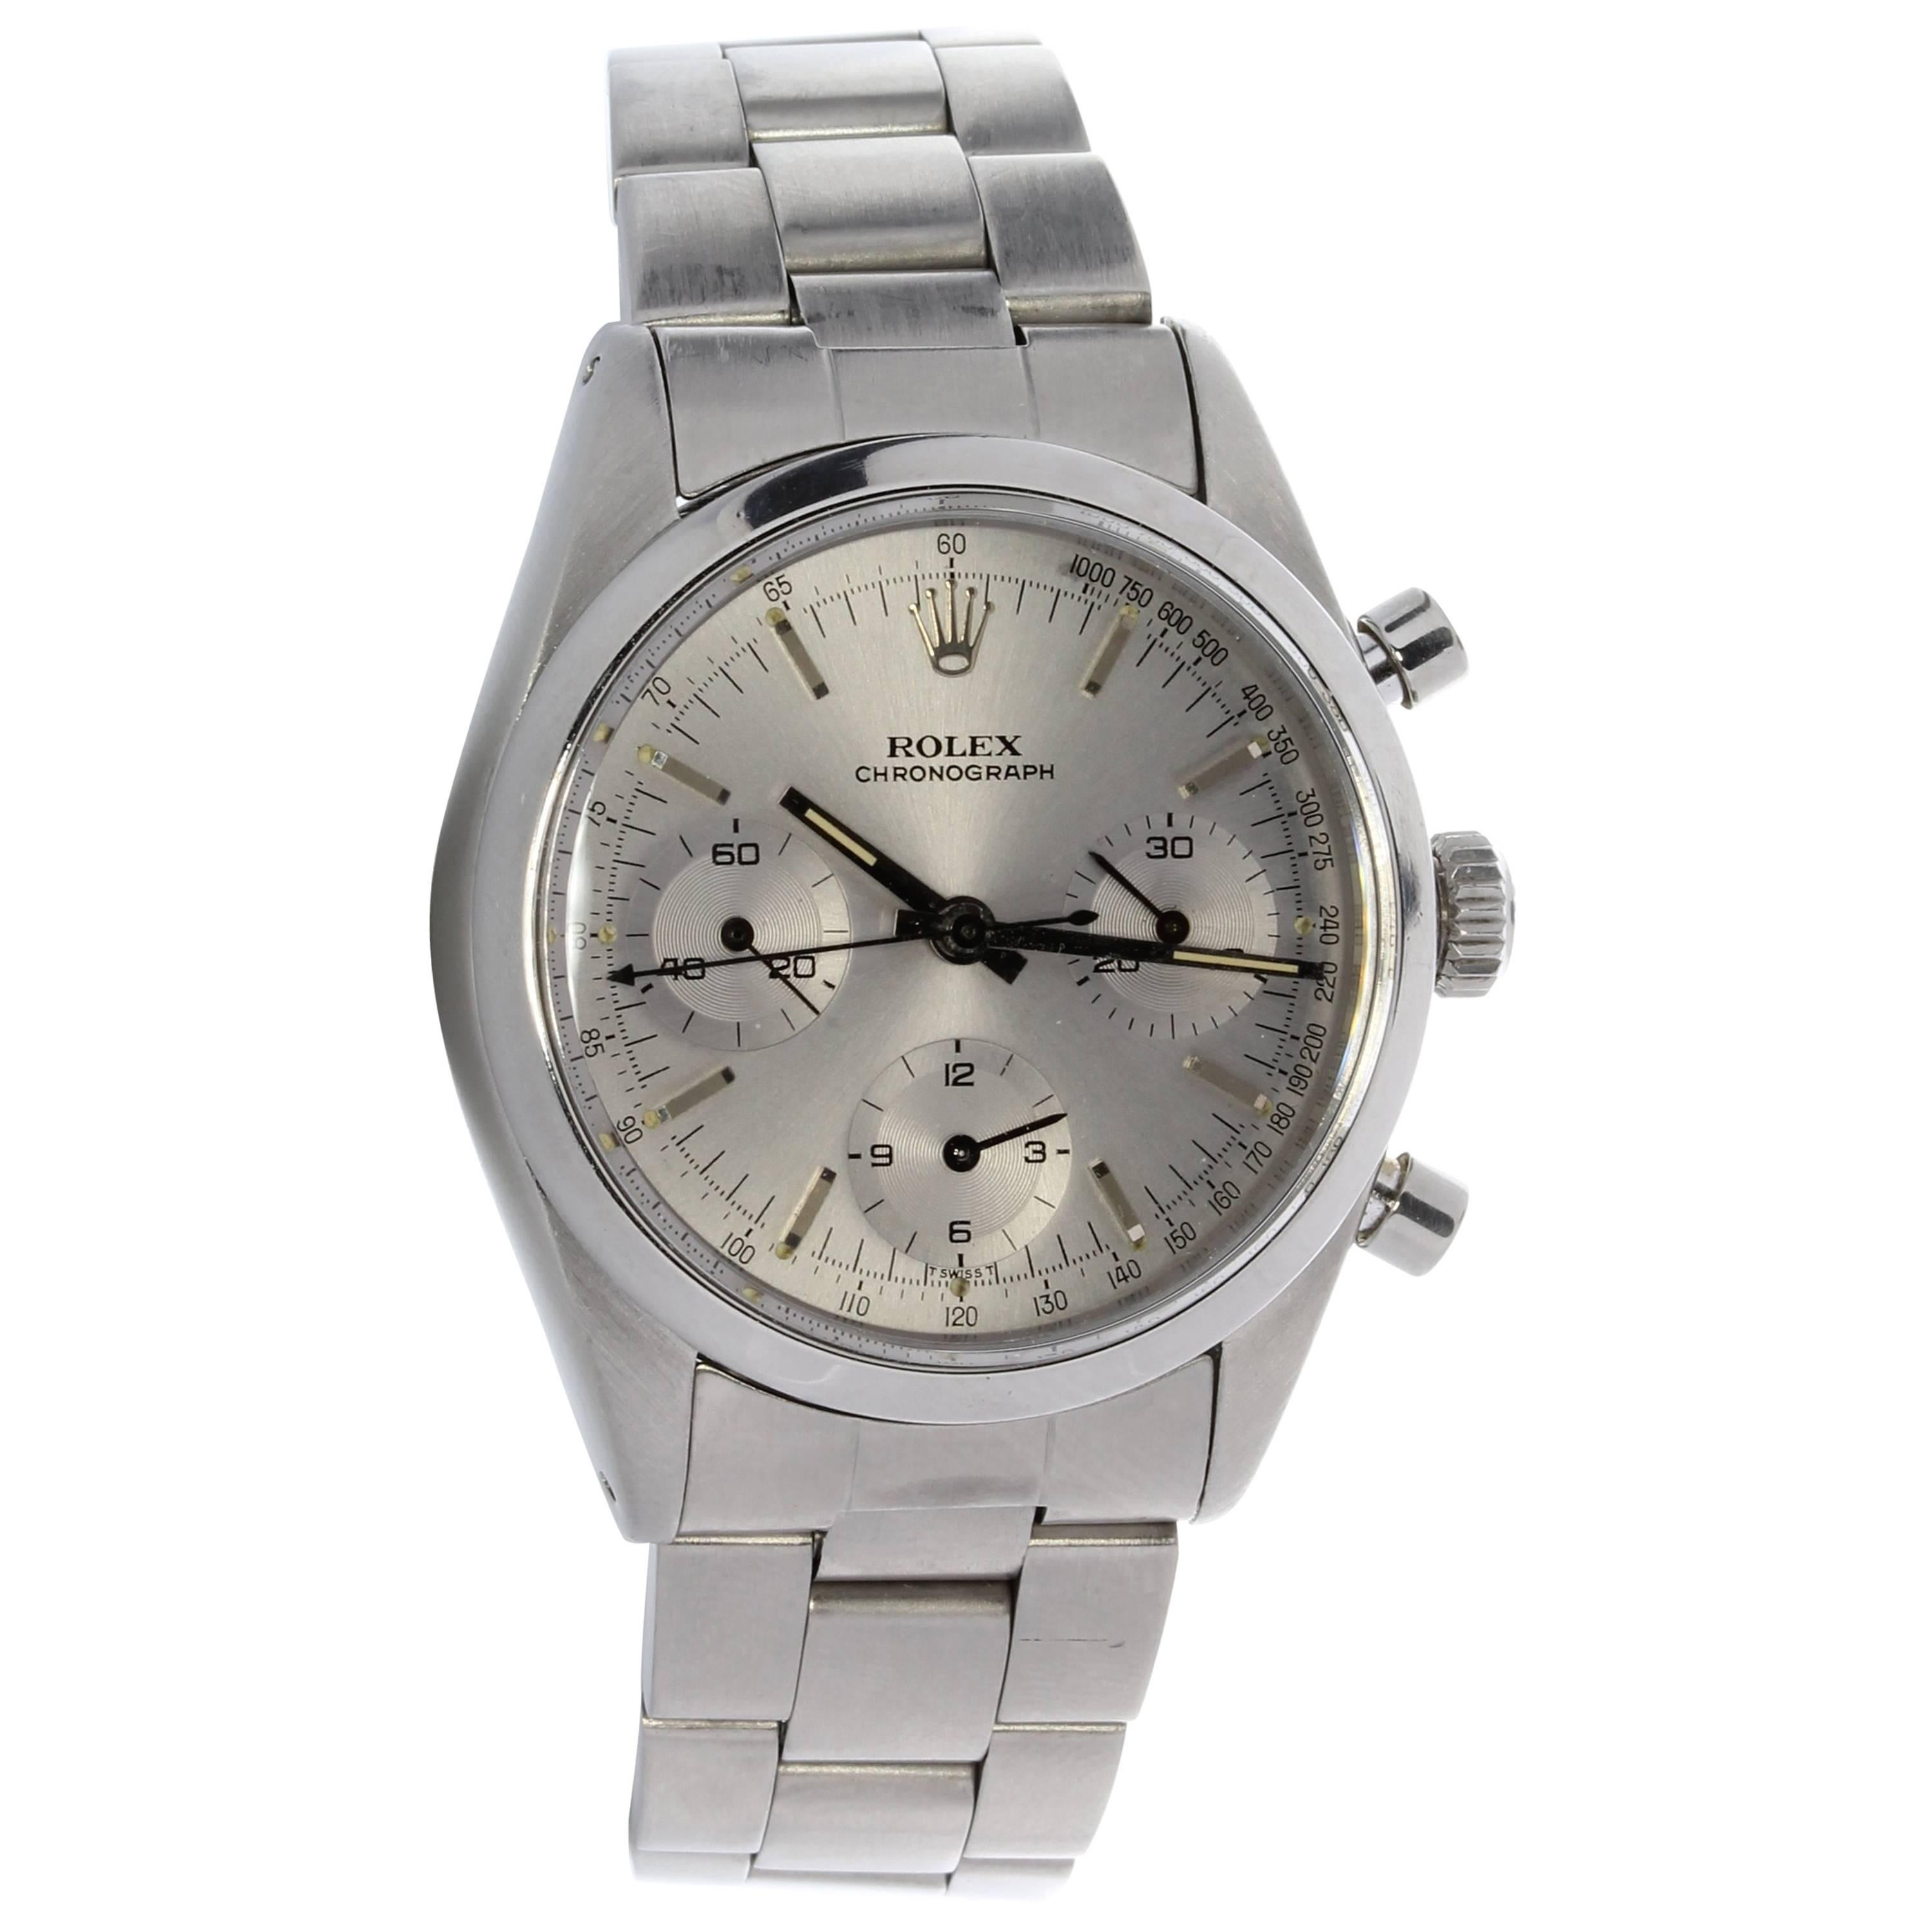 Rolex Stainless Steel Pre Daytona Chronograph wristwatch Ref 6238, circa 1964